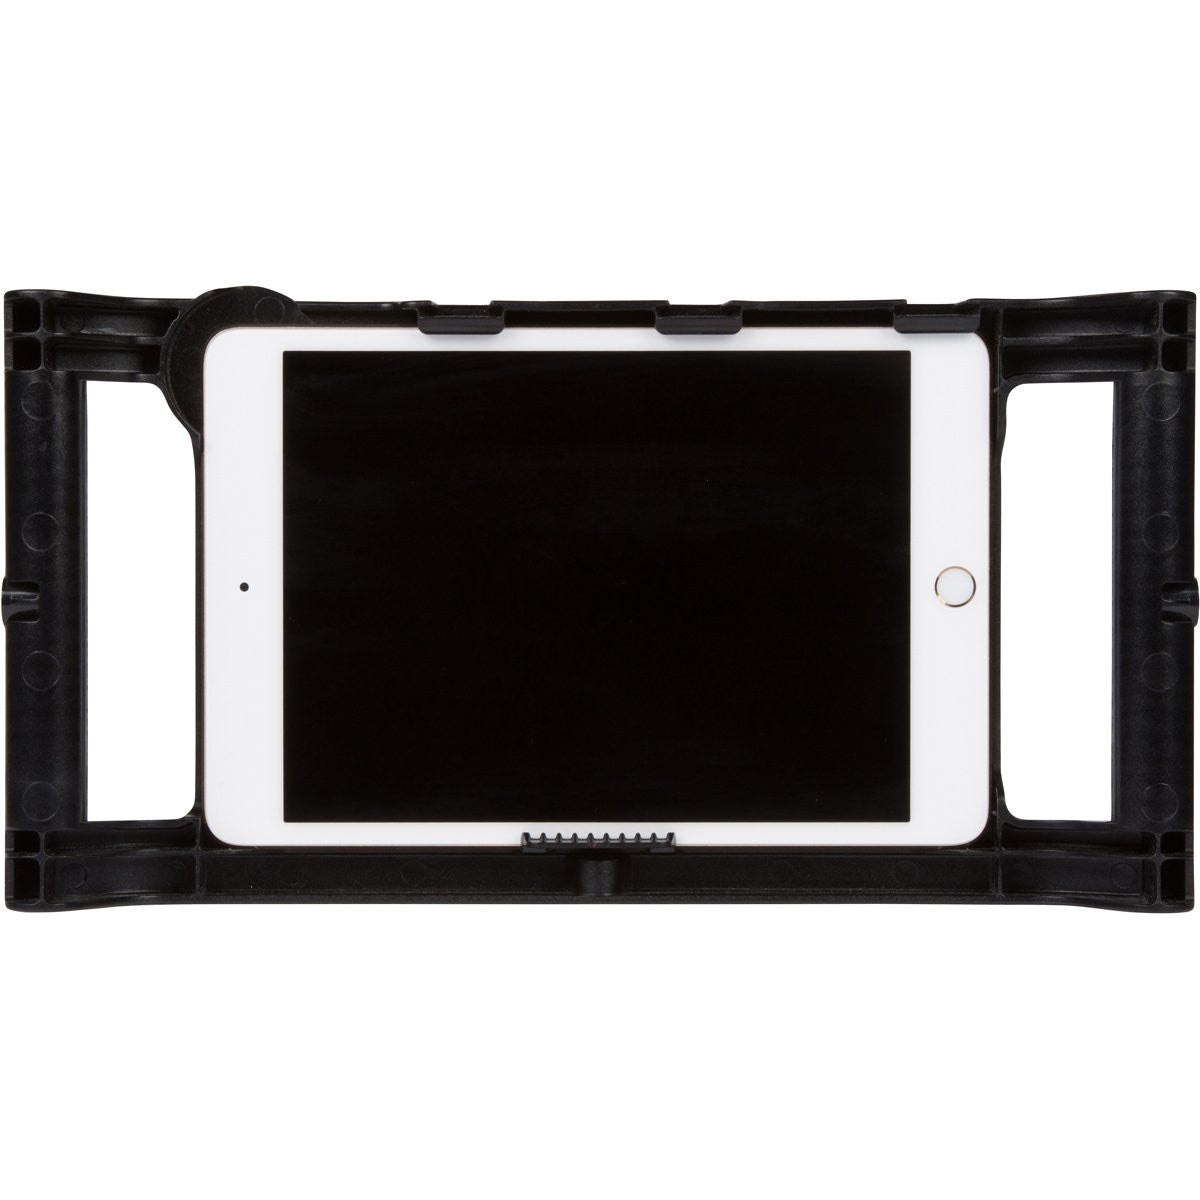 iOgrapher Filmmaking Case for iPad 9.7 - Fits iPad Air 1 & 2, 9.7 Pro,